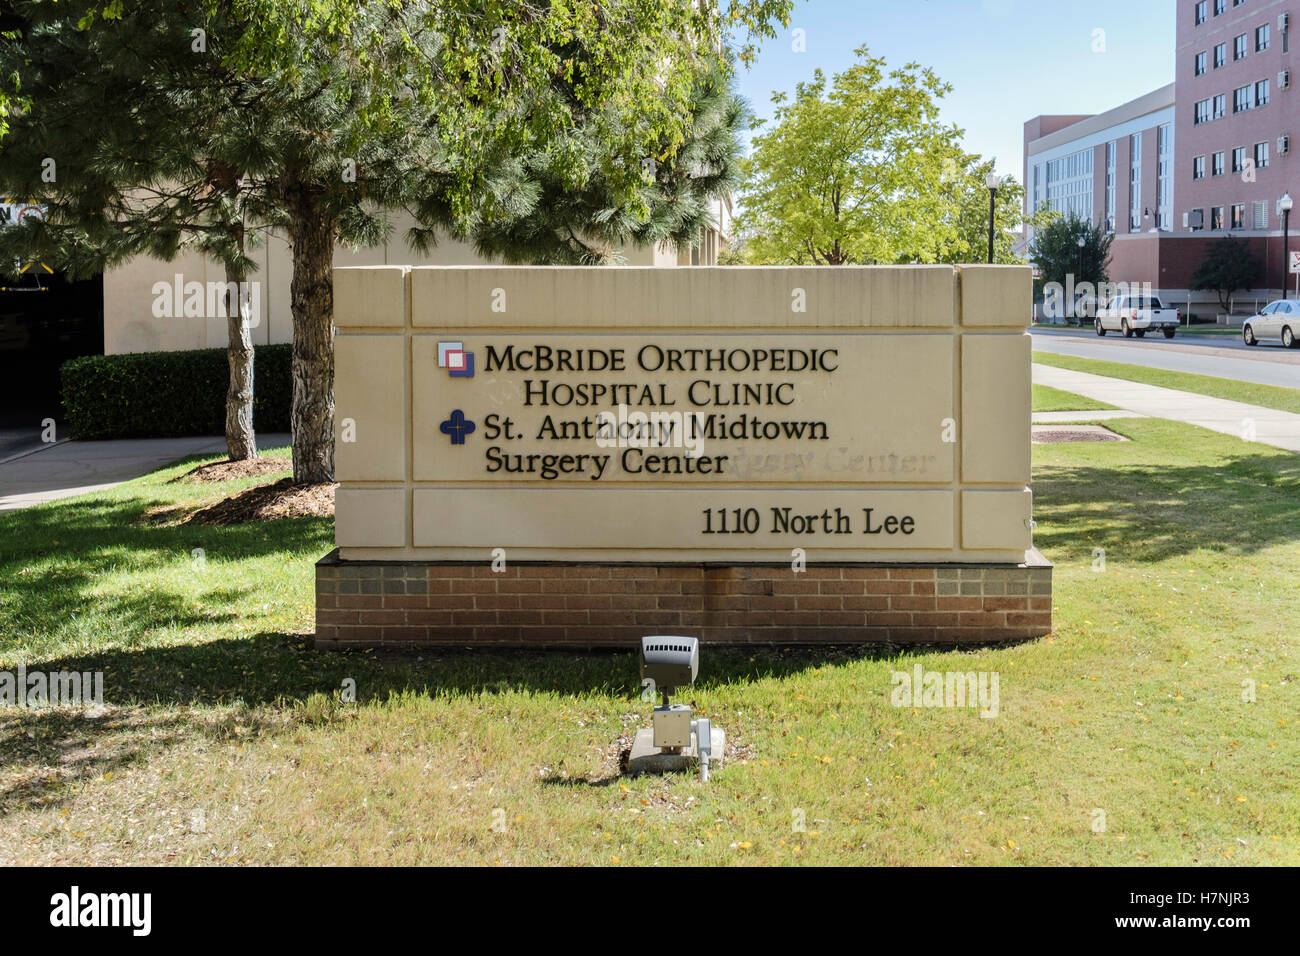 A monument sign advertising McBride Orthopedic Hospital Clinic, St. Anthony Midtown Surgery Center in Oklahoma City, Oklahoma, USA. Stock Photo